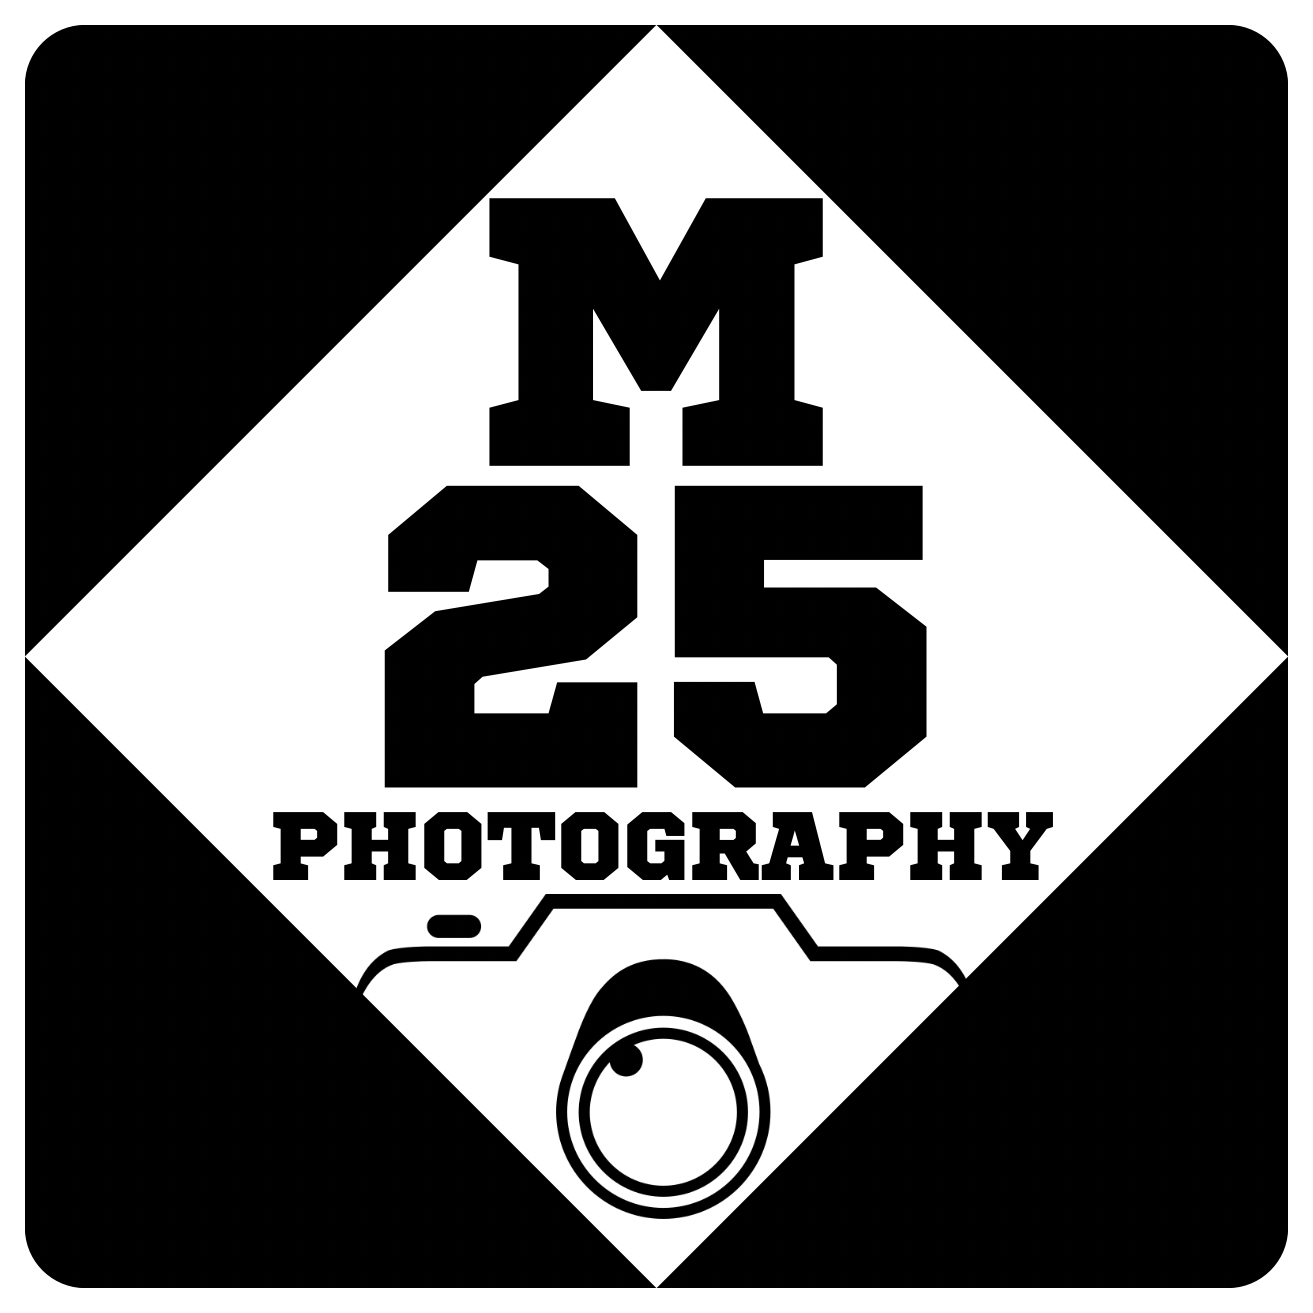 M25 Photography